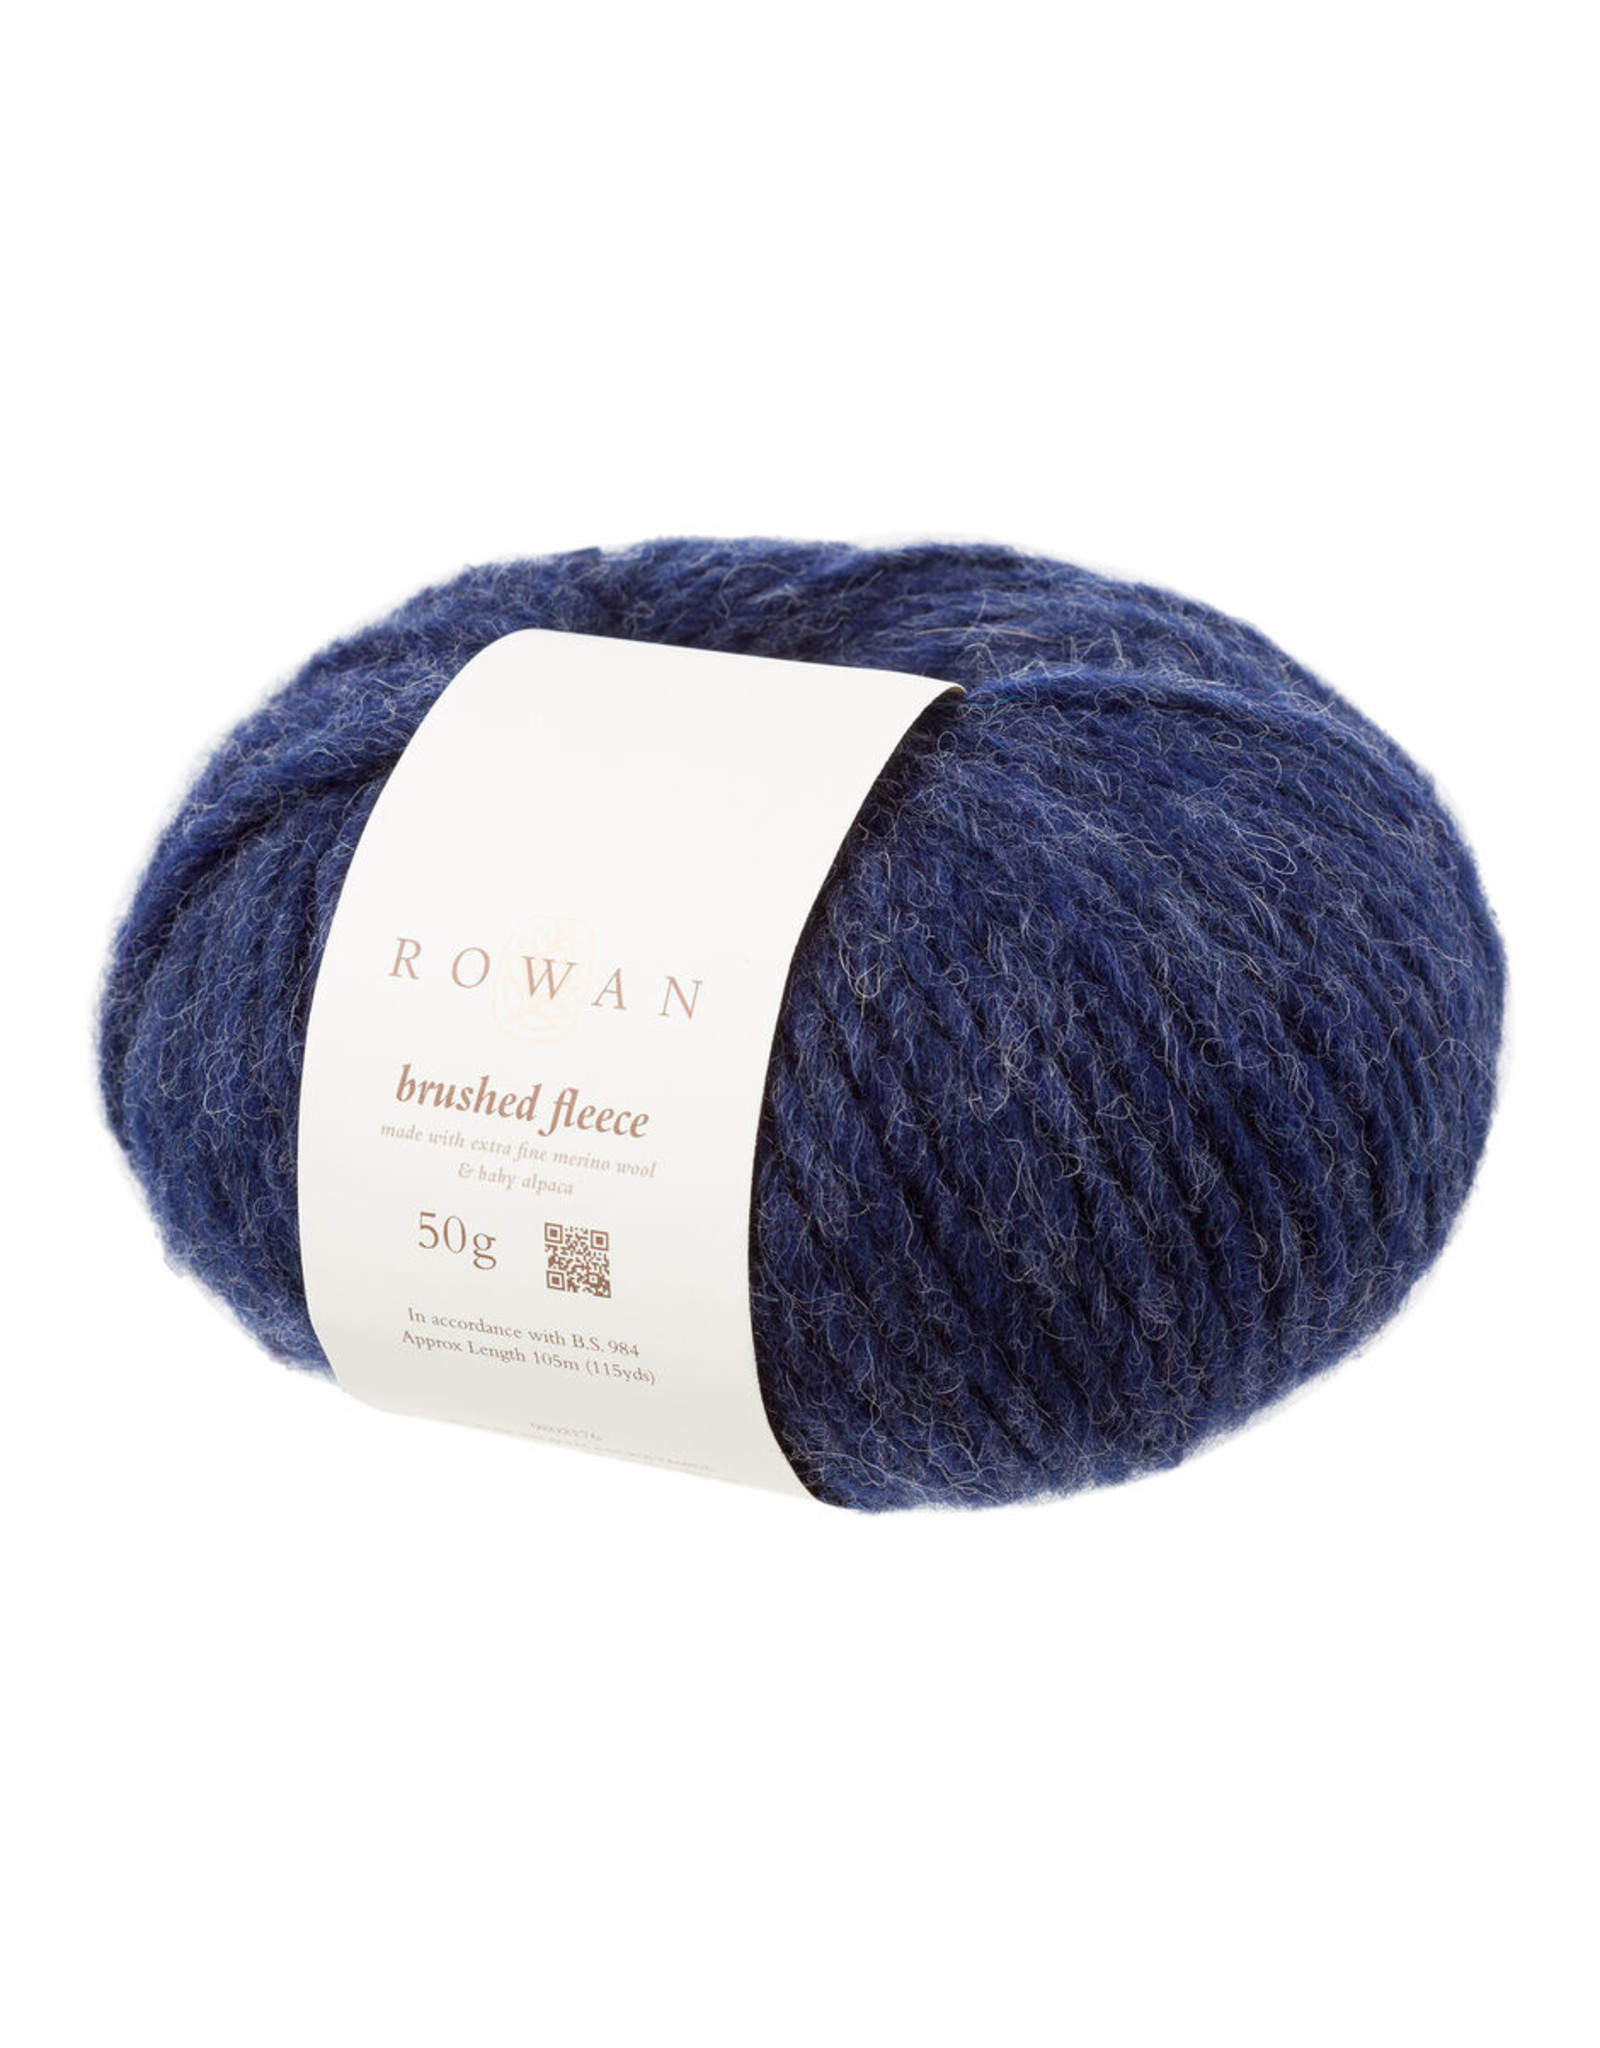 Rowan Rowan Brushed fleece 00272